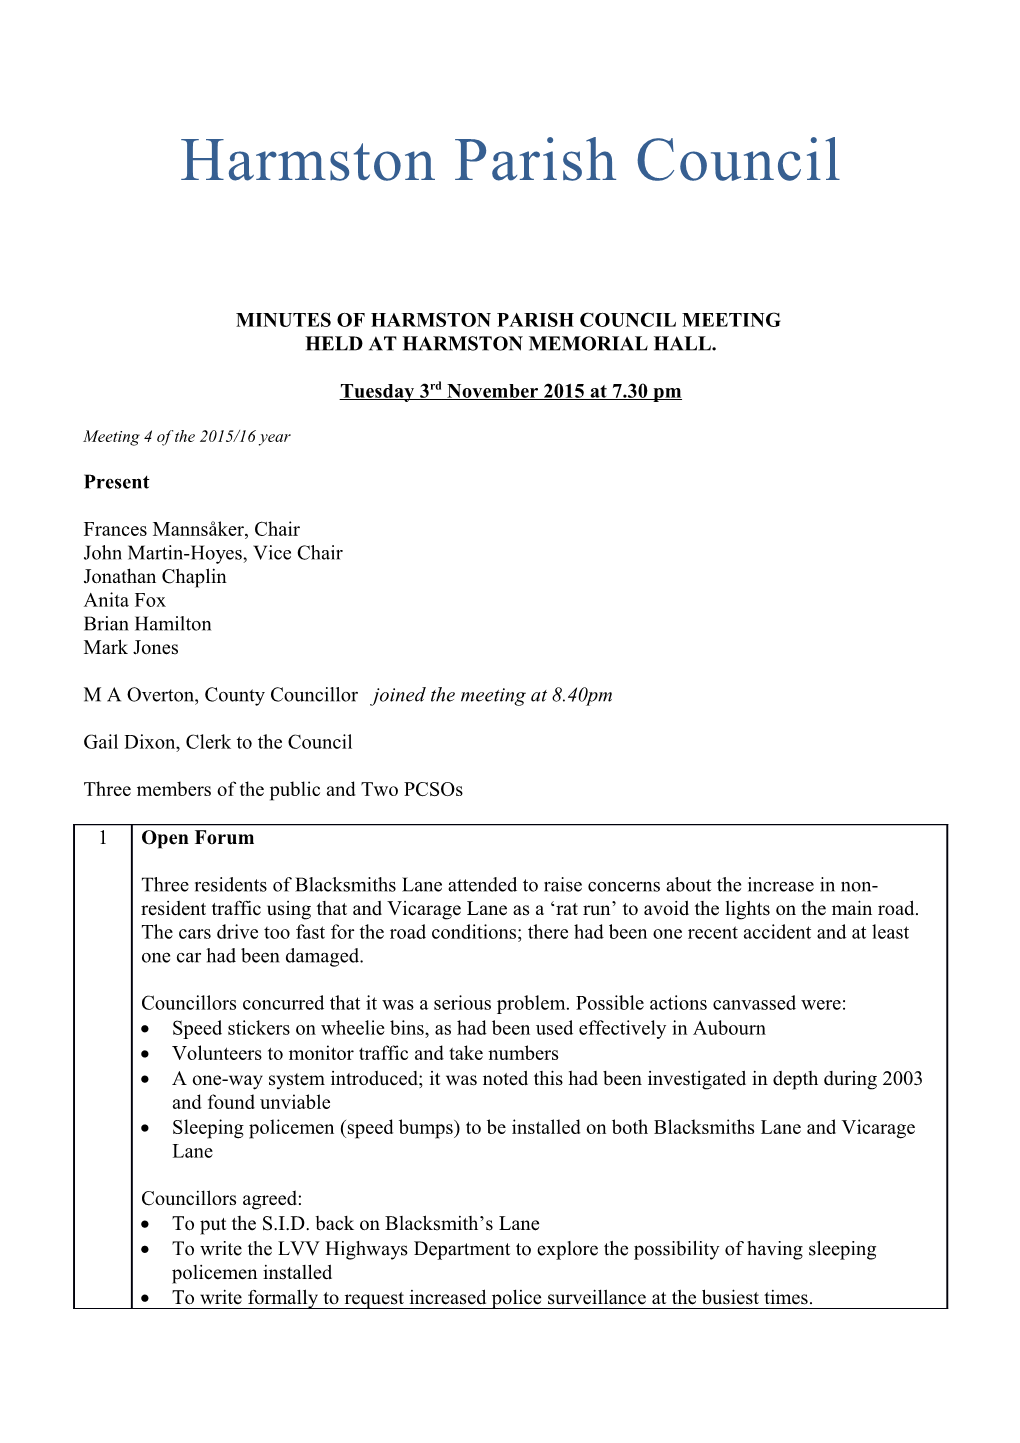 Minutes of Harmston Parish Council Meeting